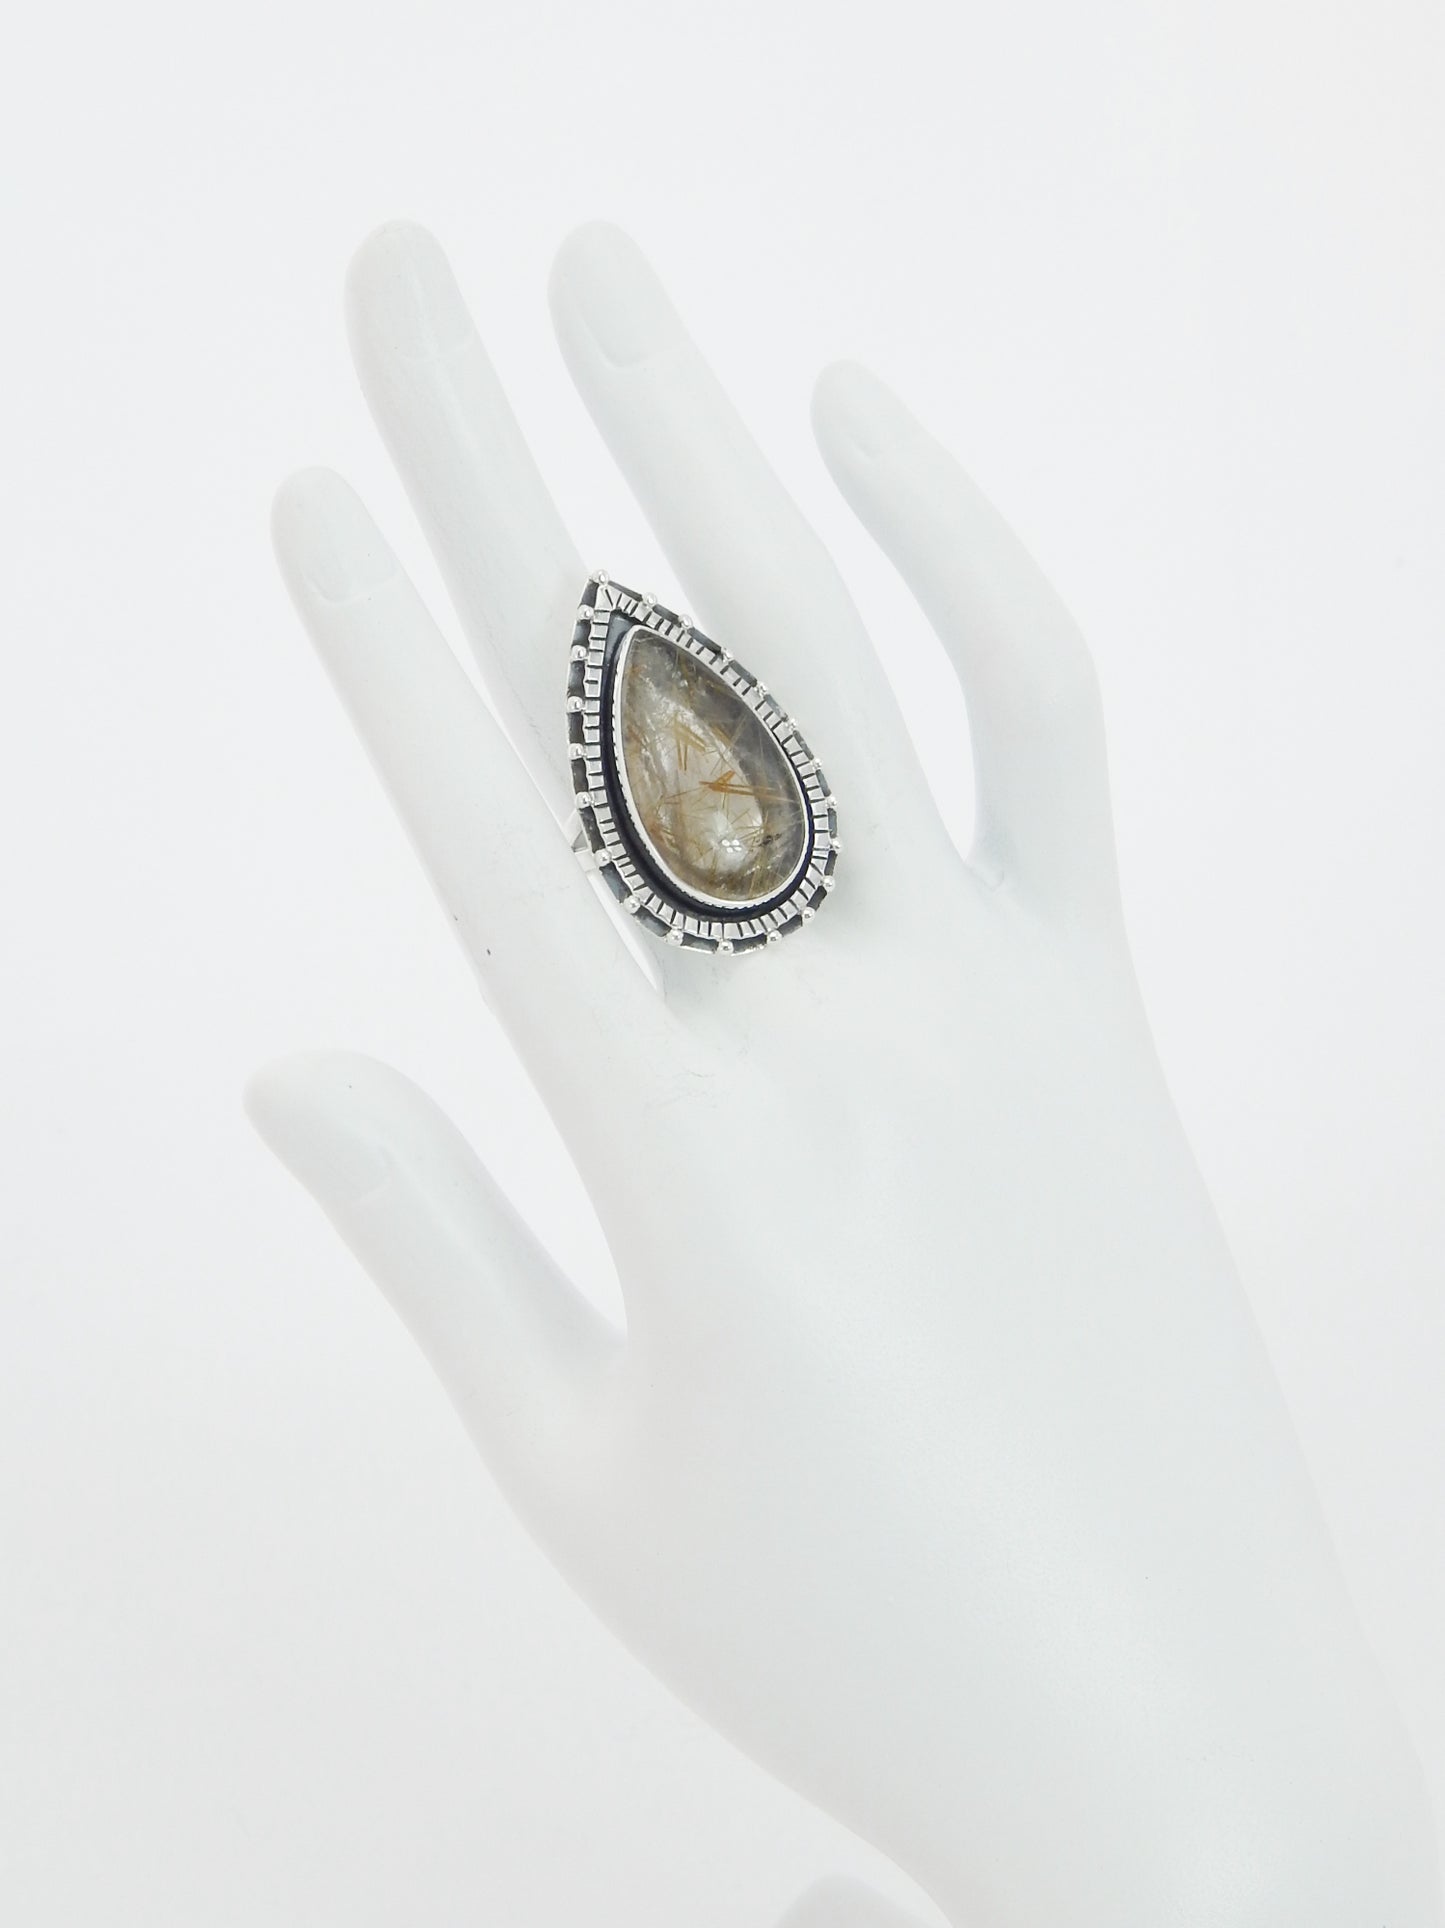 Genuine Gold Rutile Pear Cut Boho Ring in 925 Stelring Silver